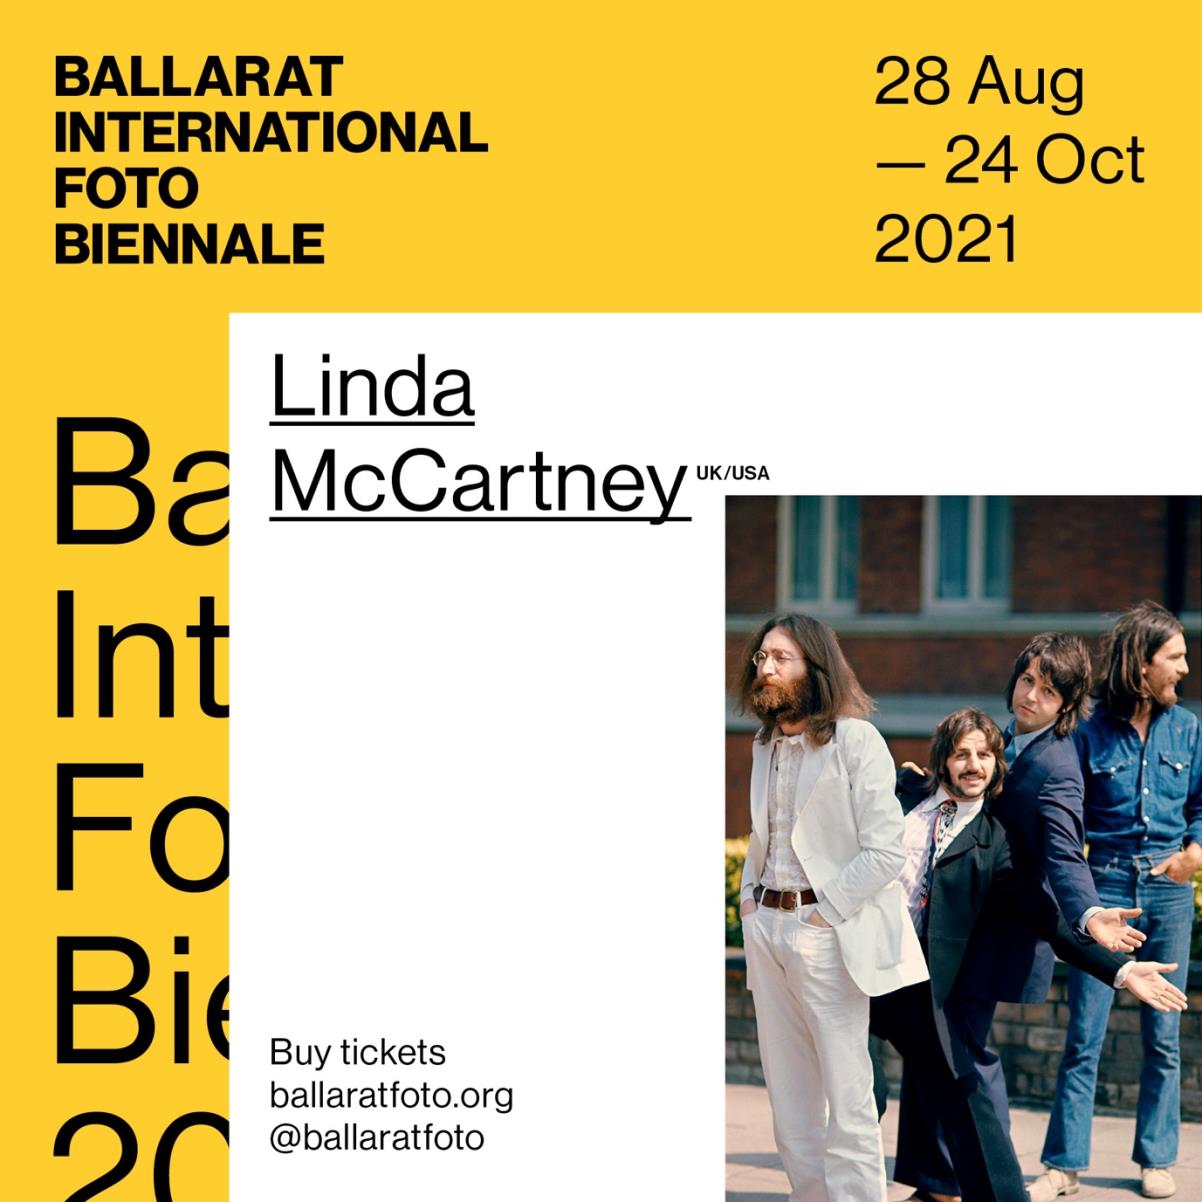 Linda McCartney Retrospective to be open at Ballarat International